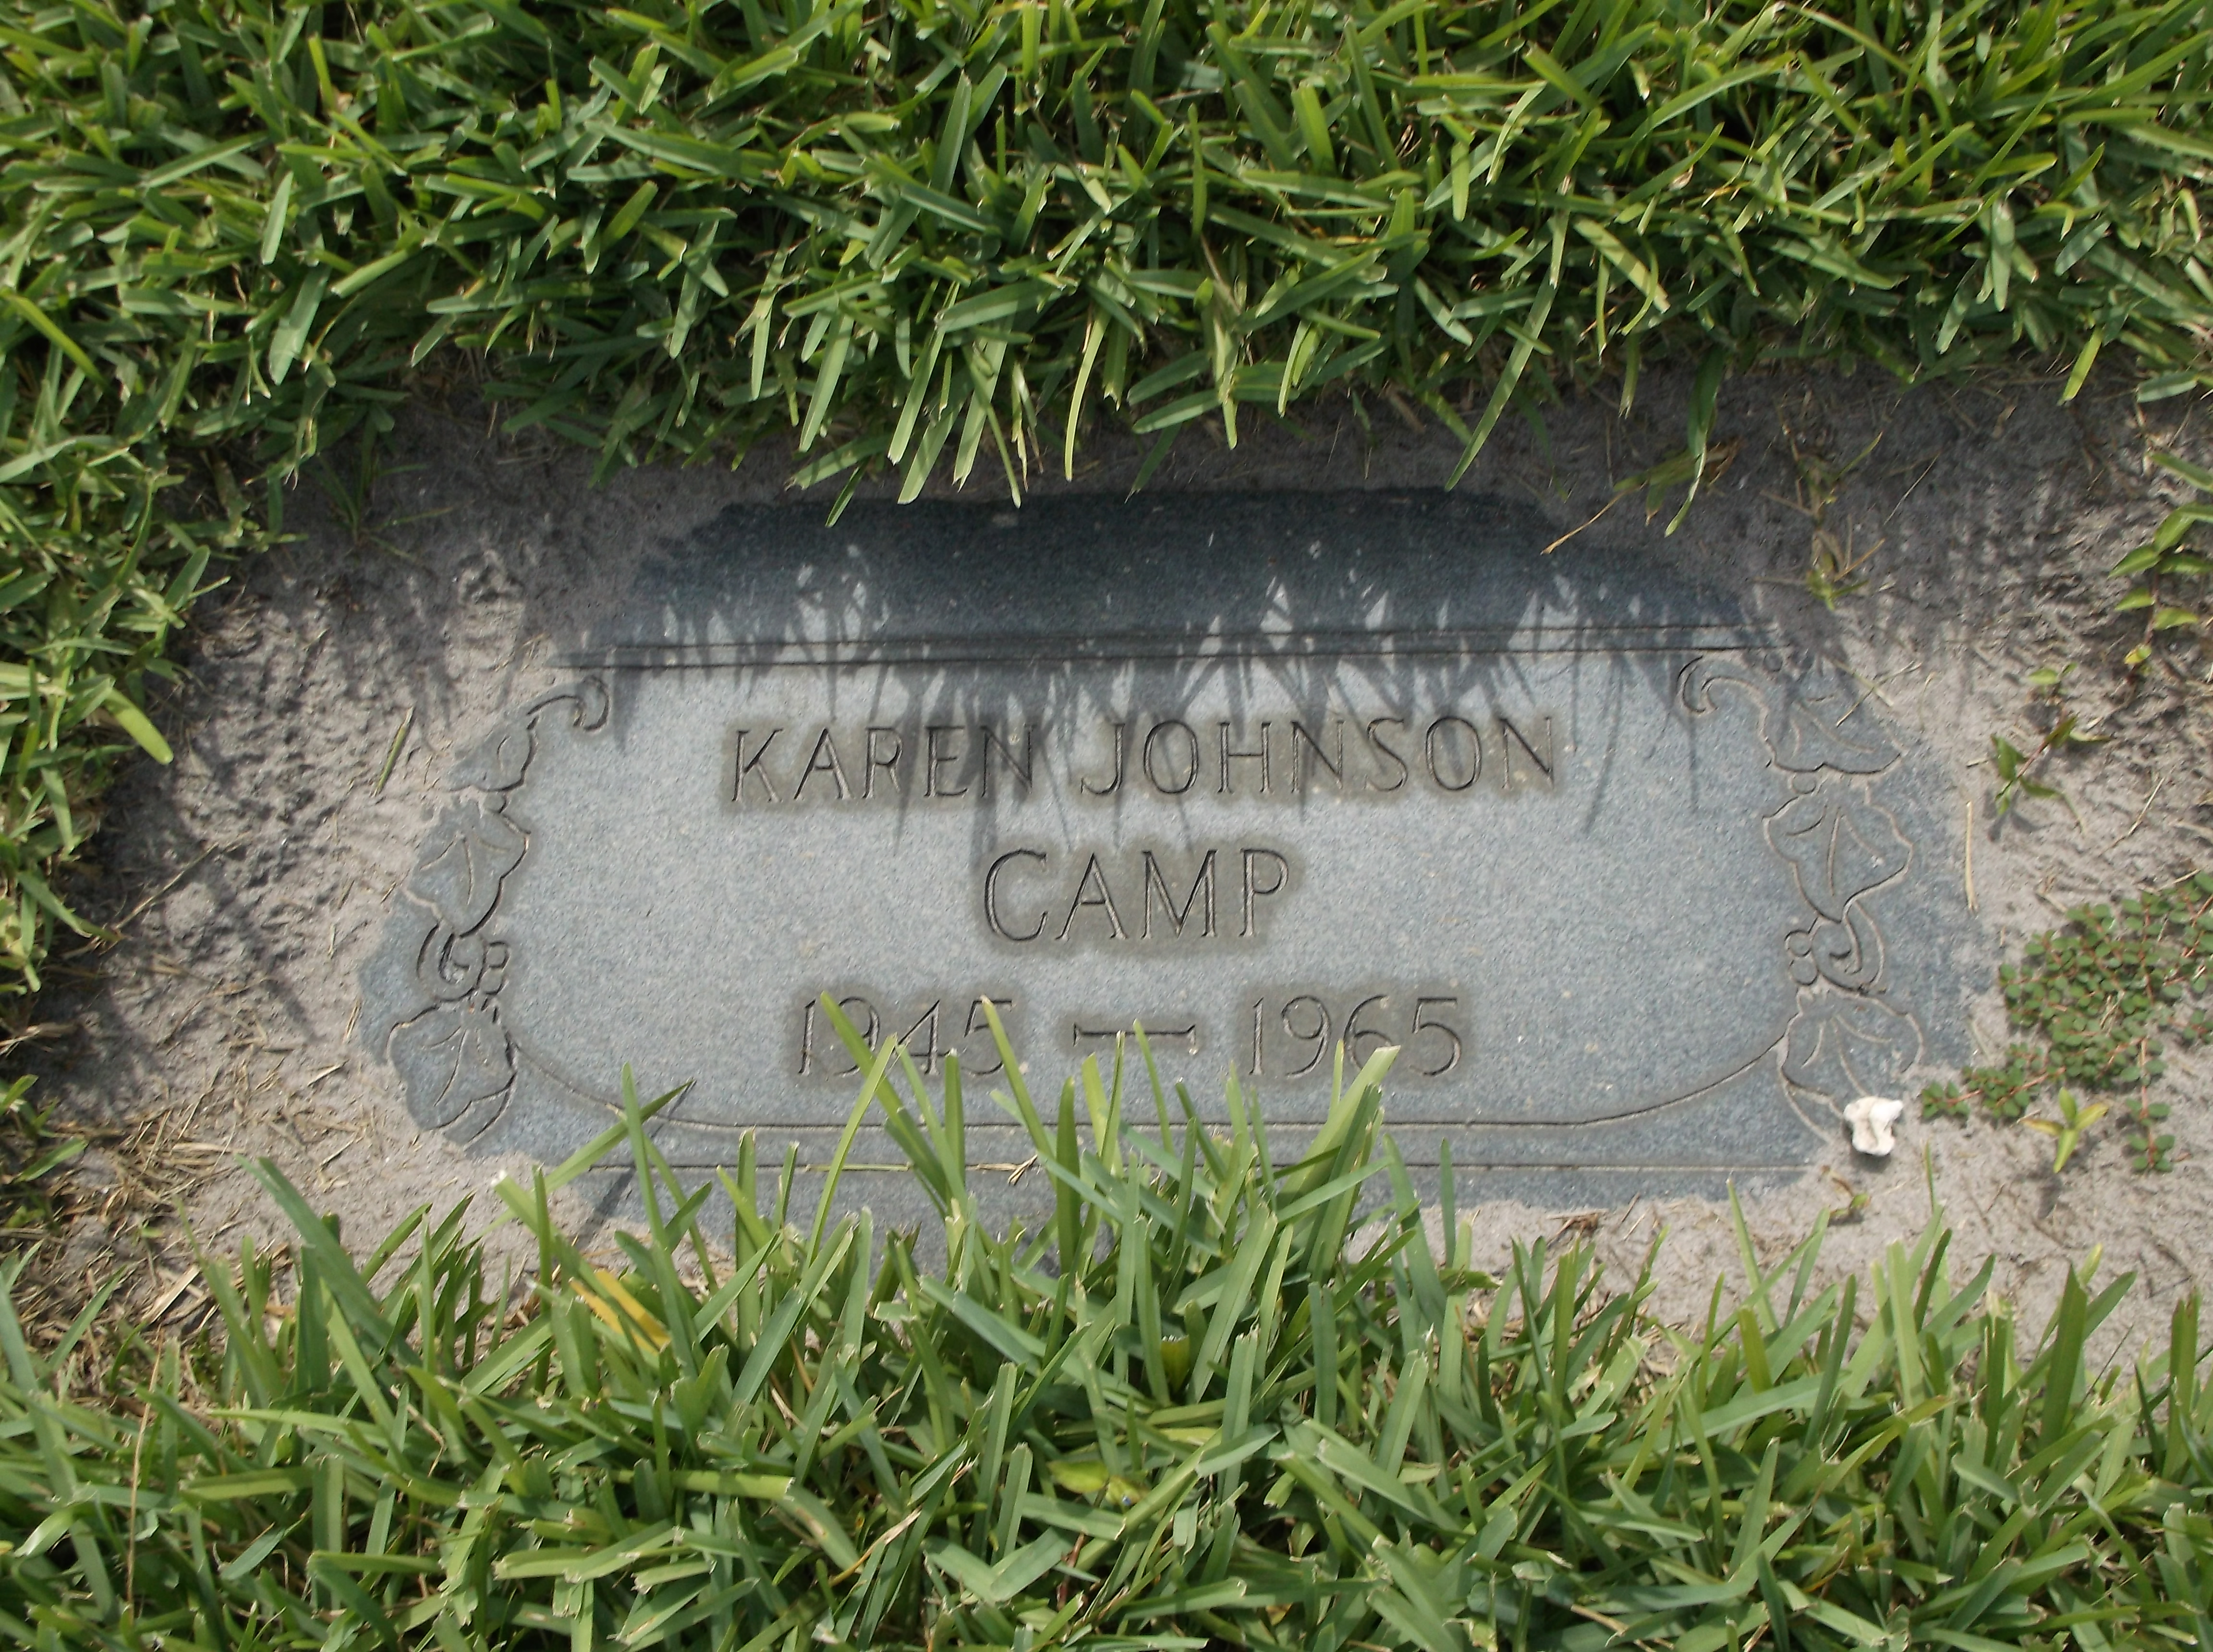 Karen Johnson Camp